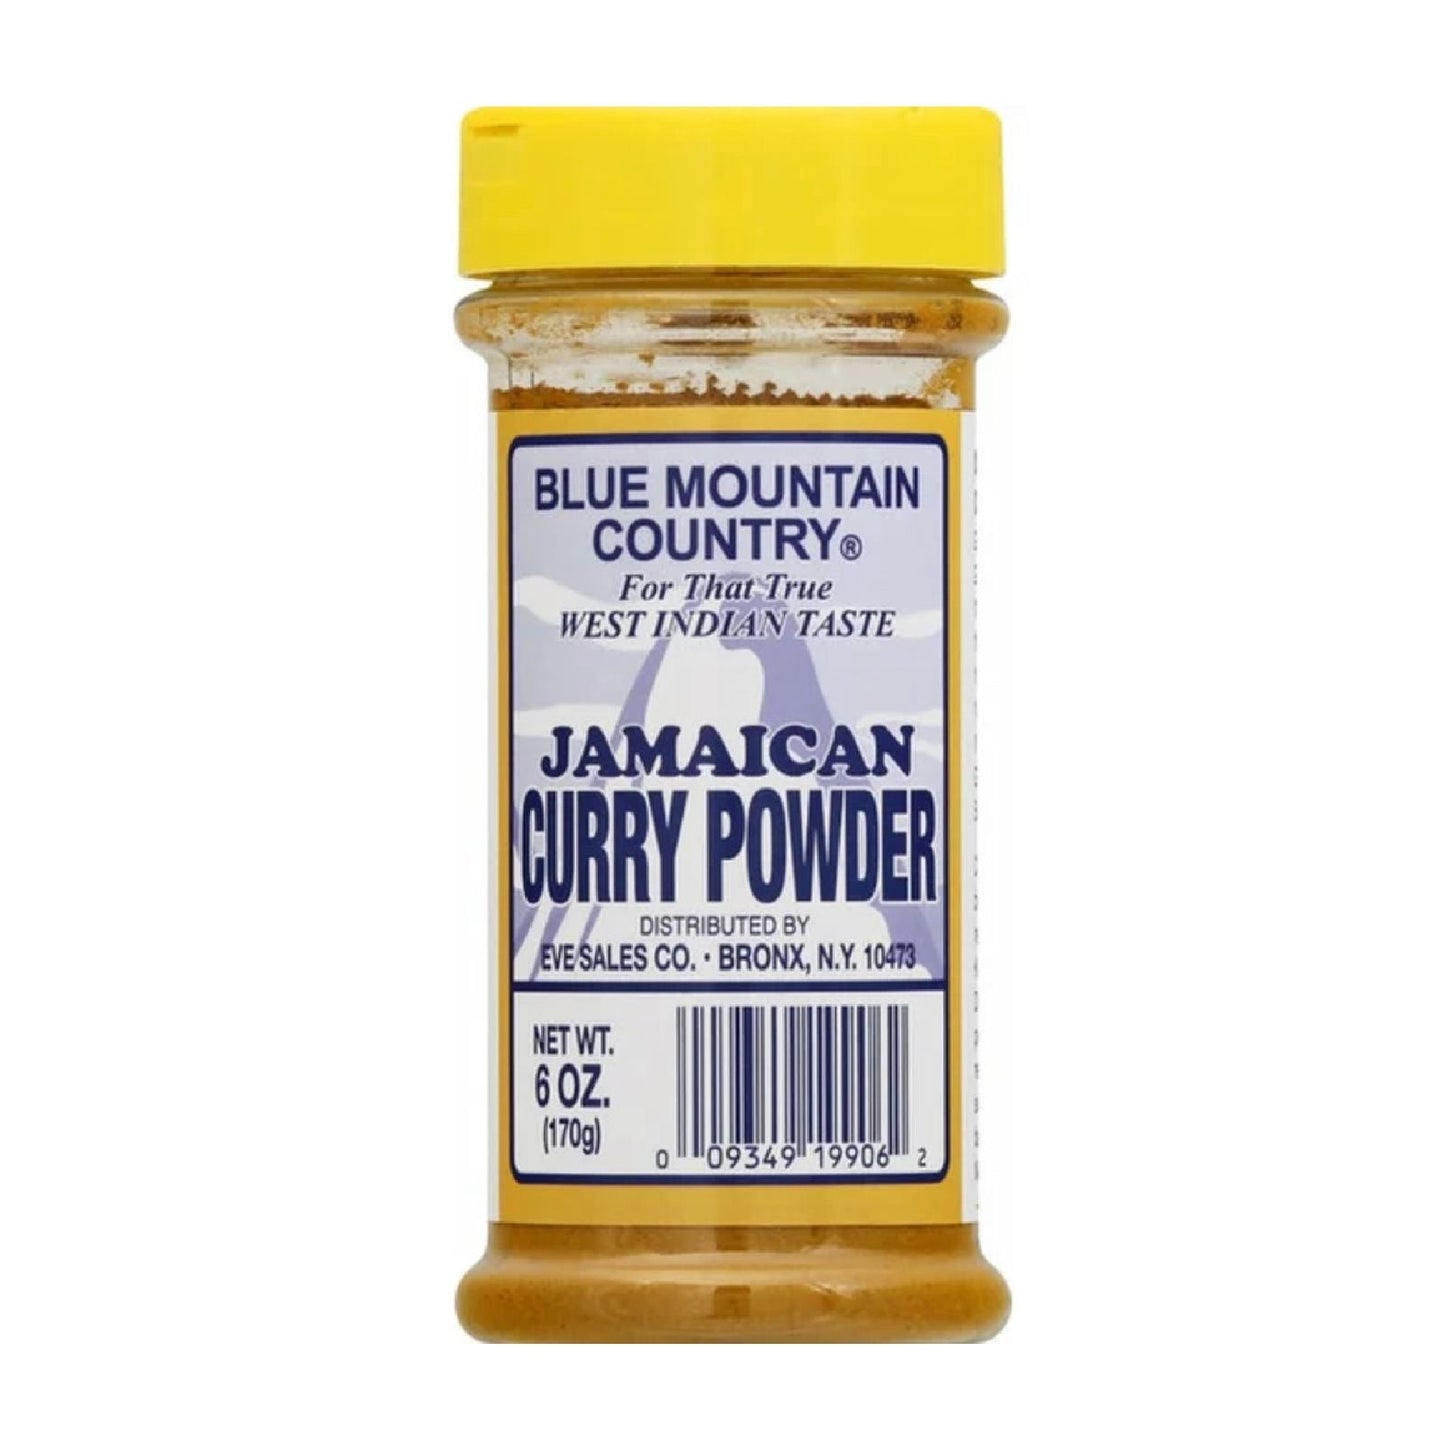 Jamaica Curry Powder 6oz - Break Stop